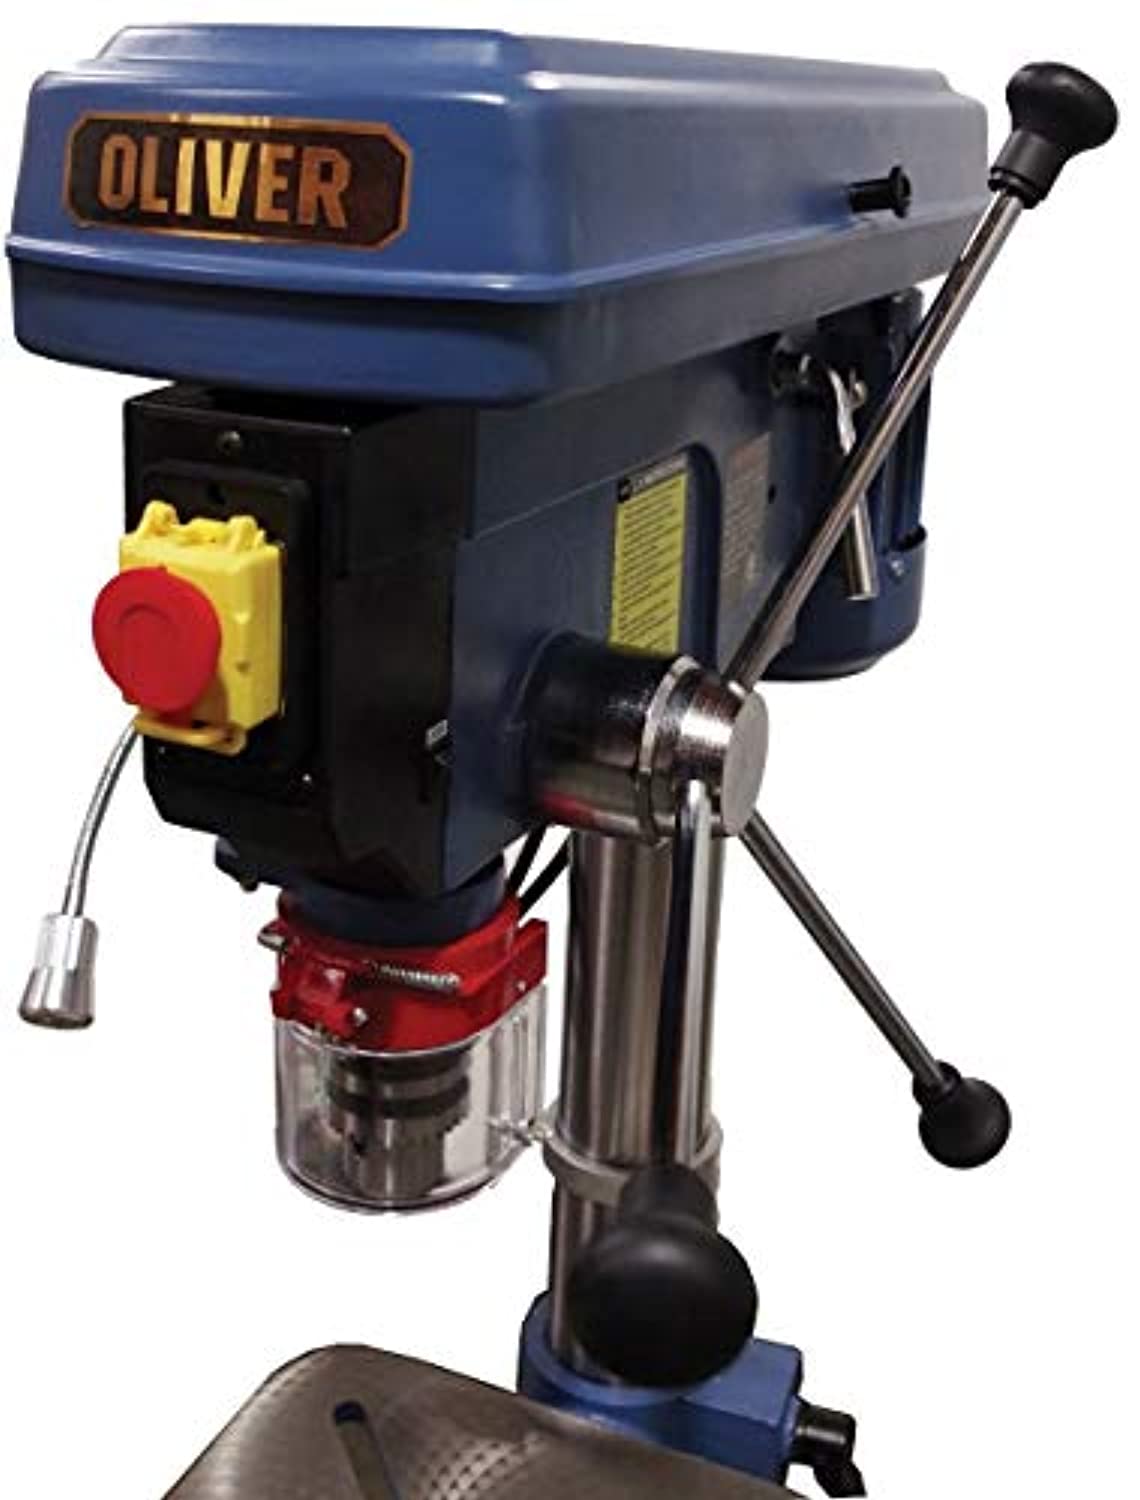 Oliver Machinery 17" Swing Floor Model Drill Press